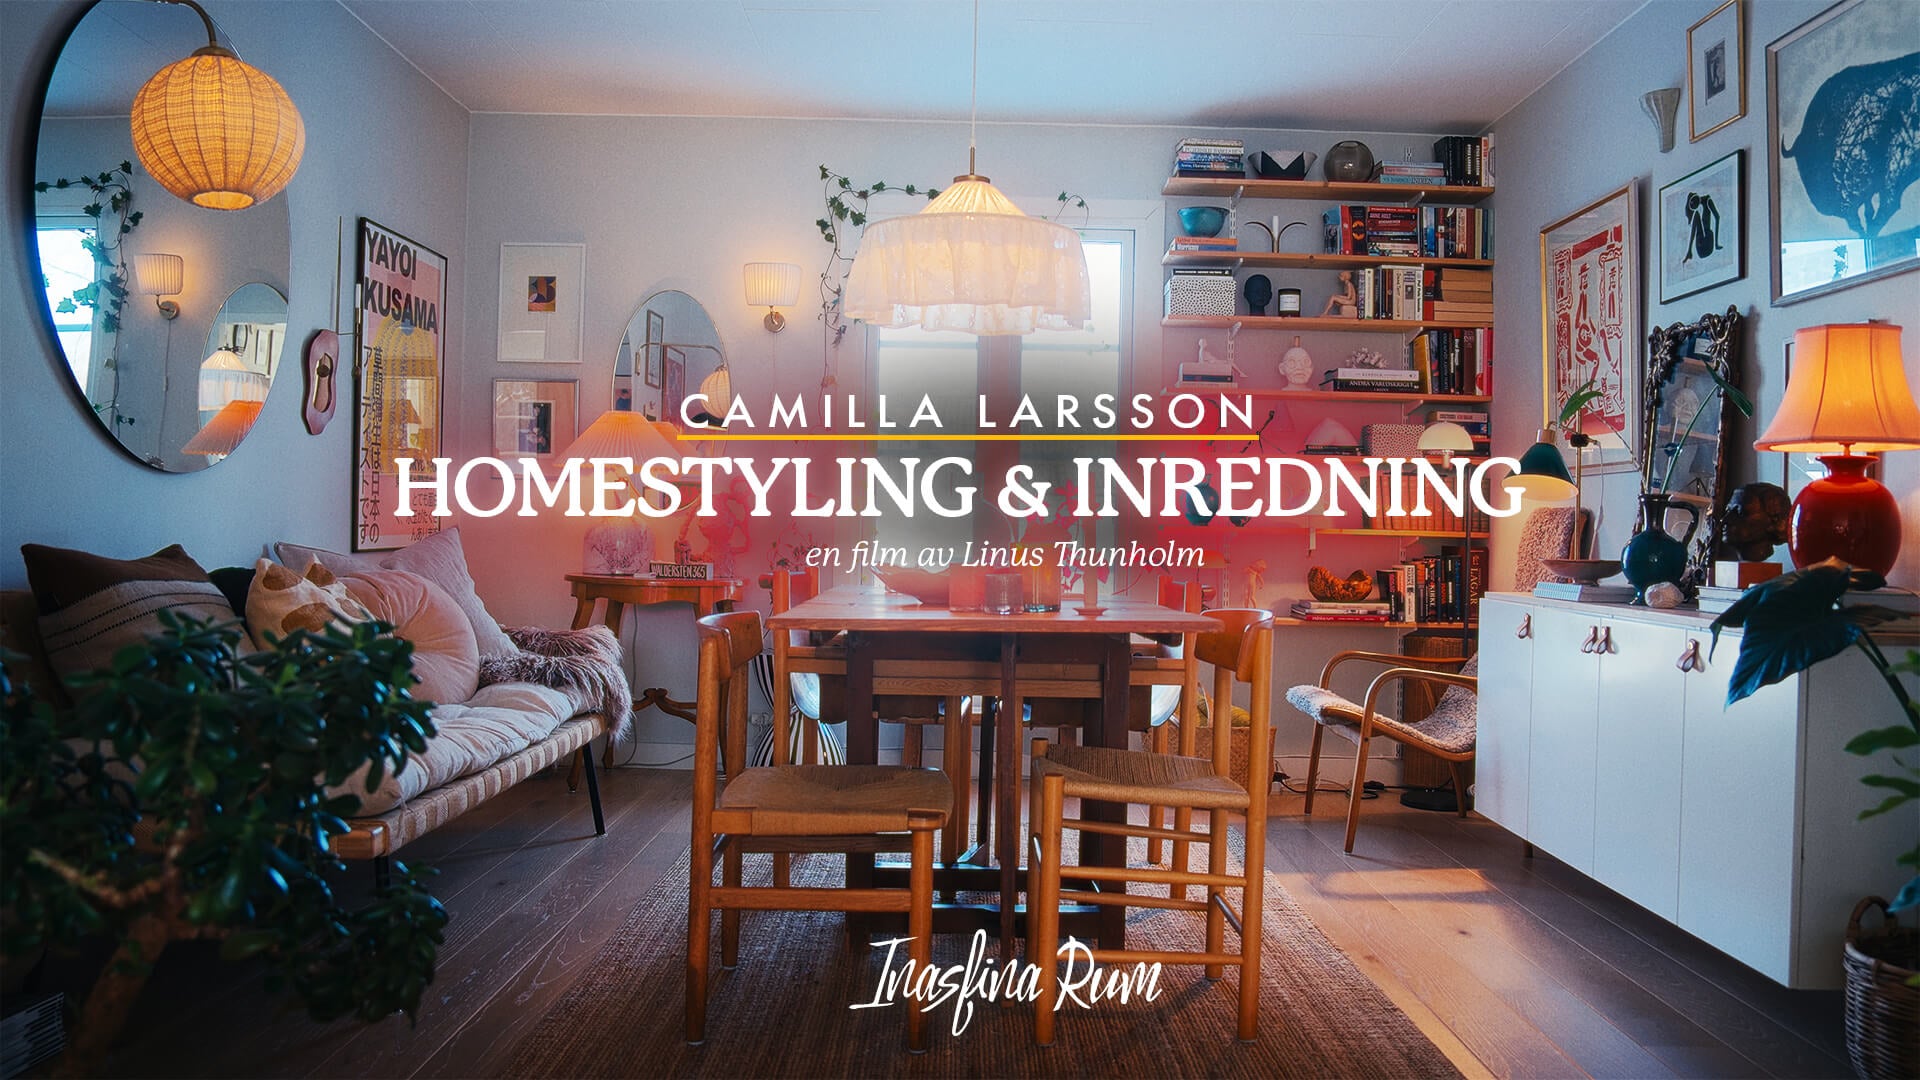 Load video: Inasfina Room Homestyling